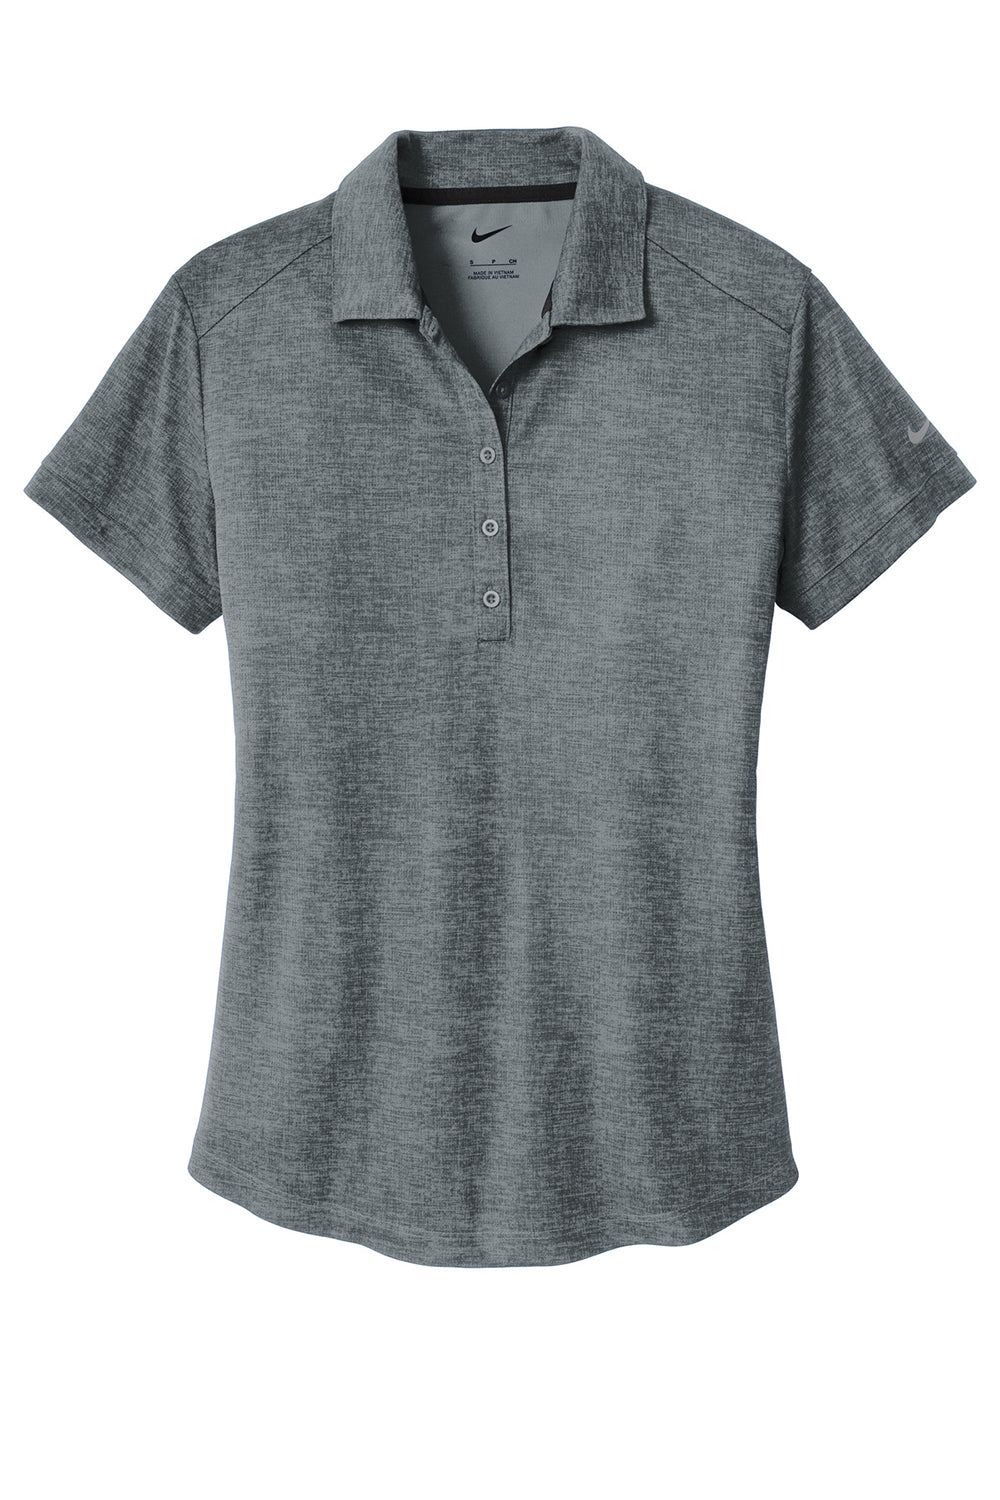 Nike 838961 Womens Dri-Fit Moisture Wicking Short Sleeve Polo Shirt Cool Grey Flat Front